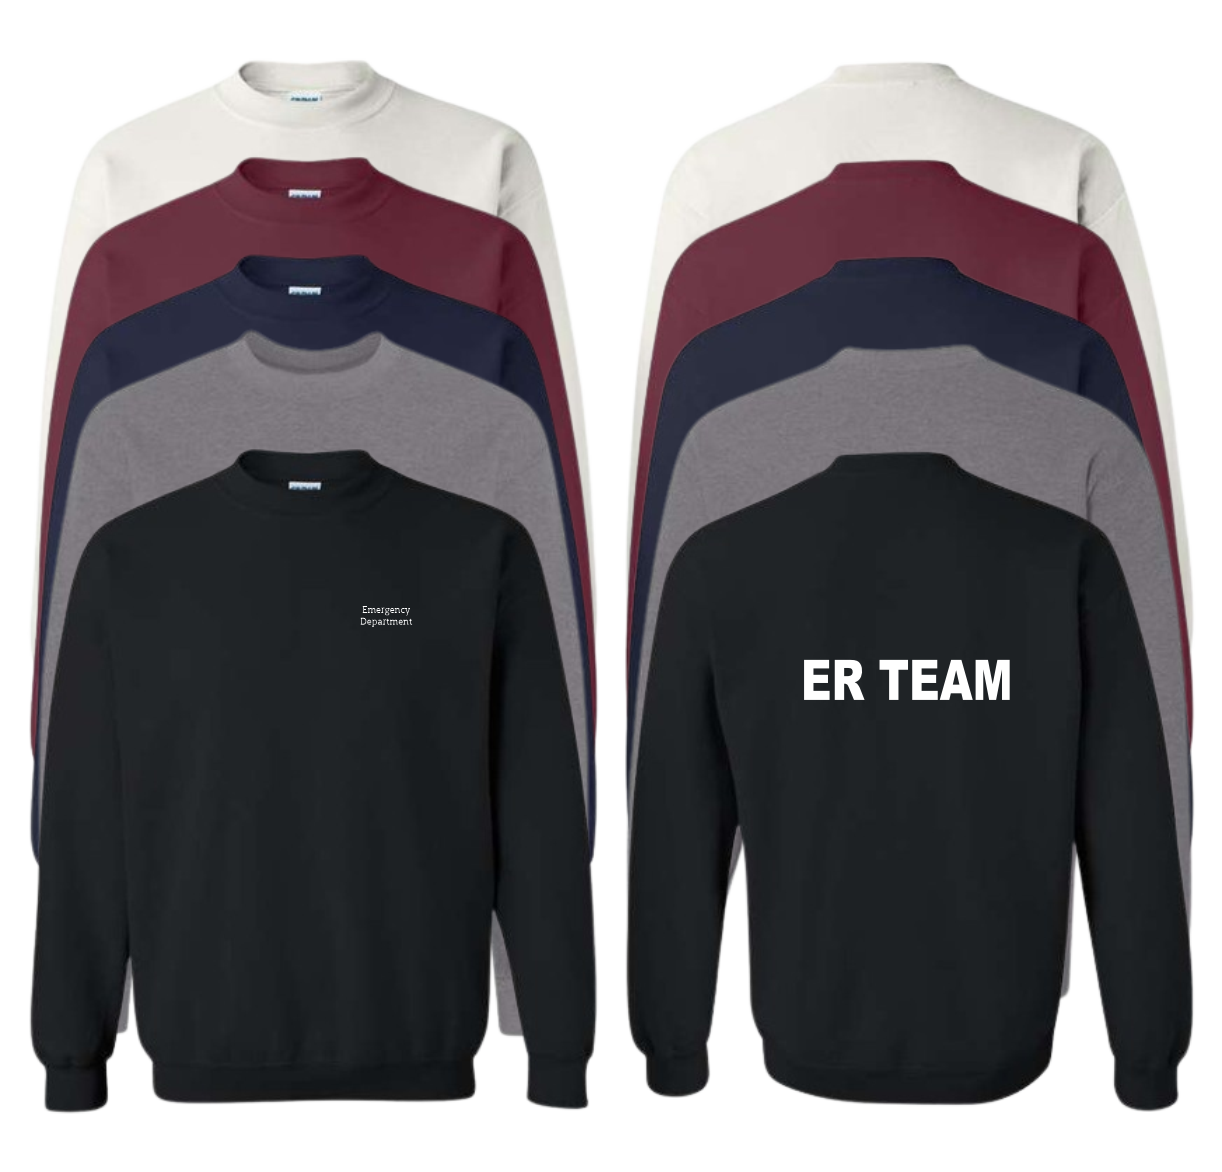 Emergency Department ER Team Cotton Crewneck Sweatshirt (+ options)